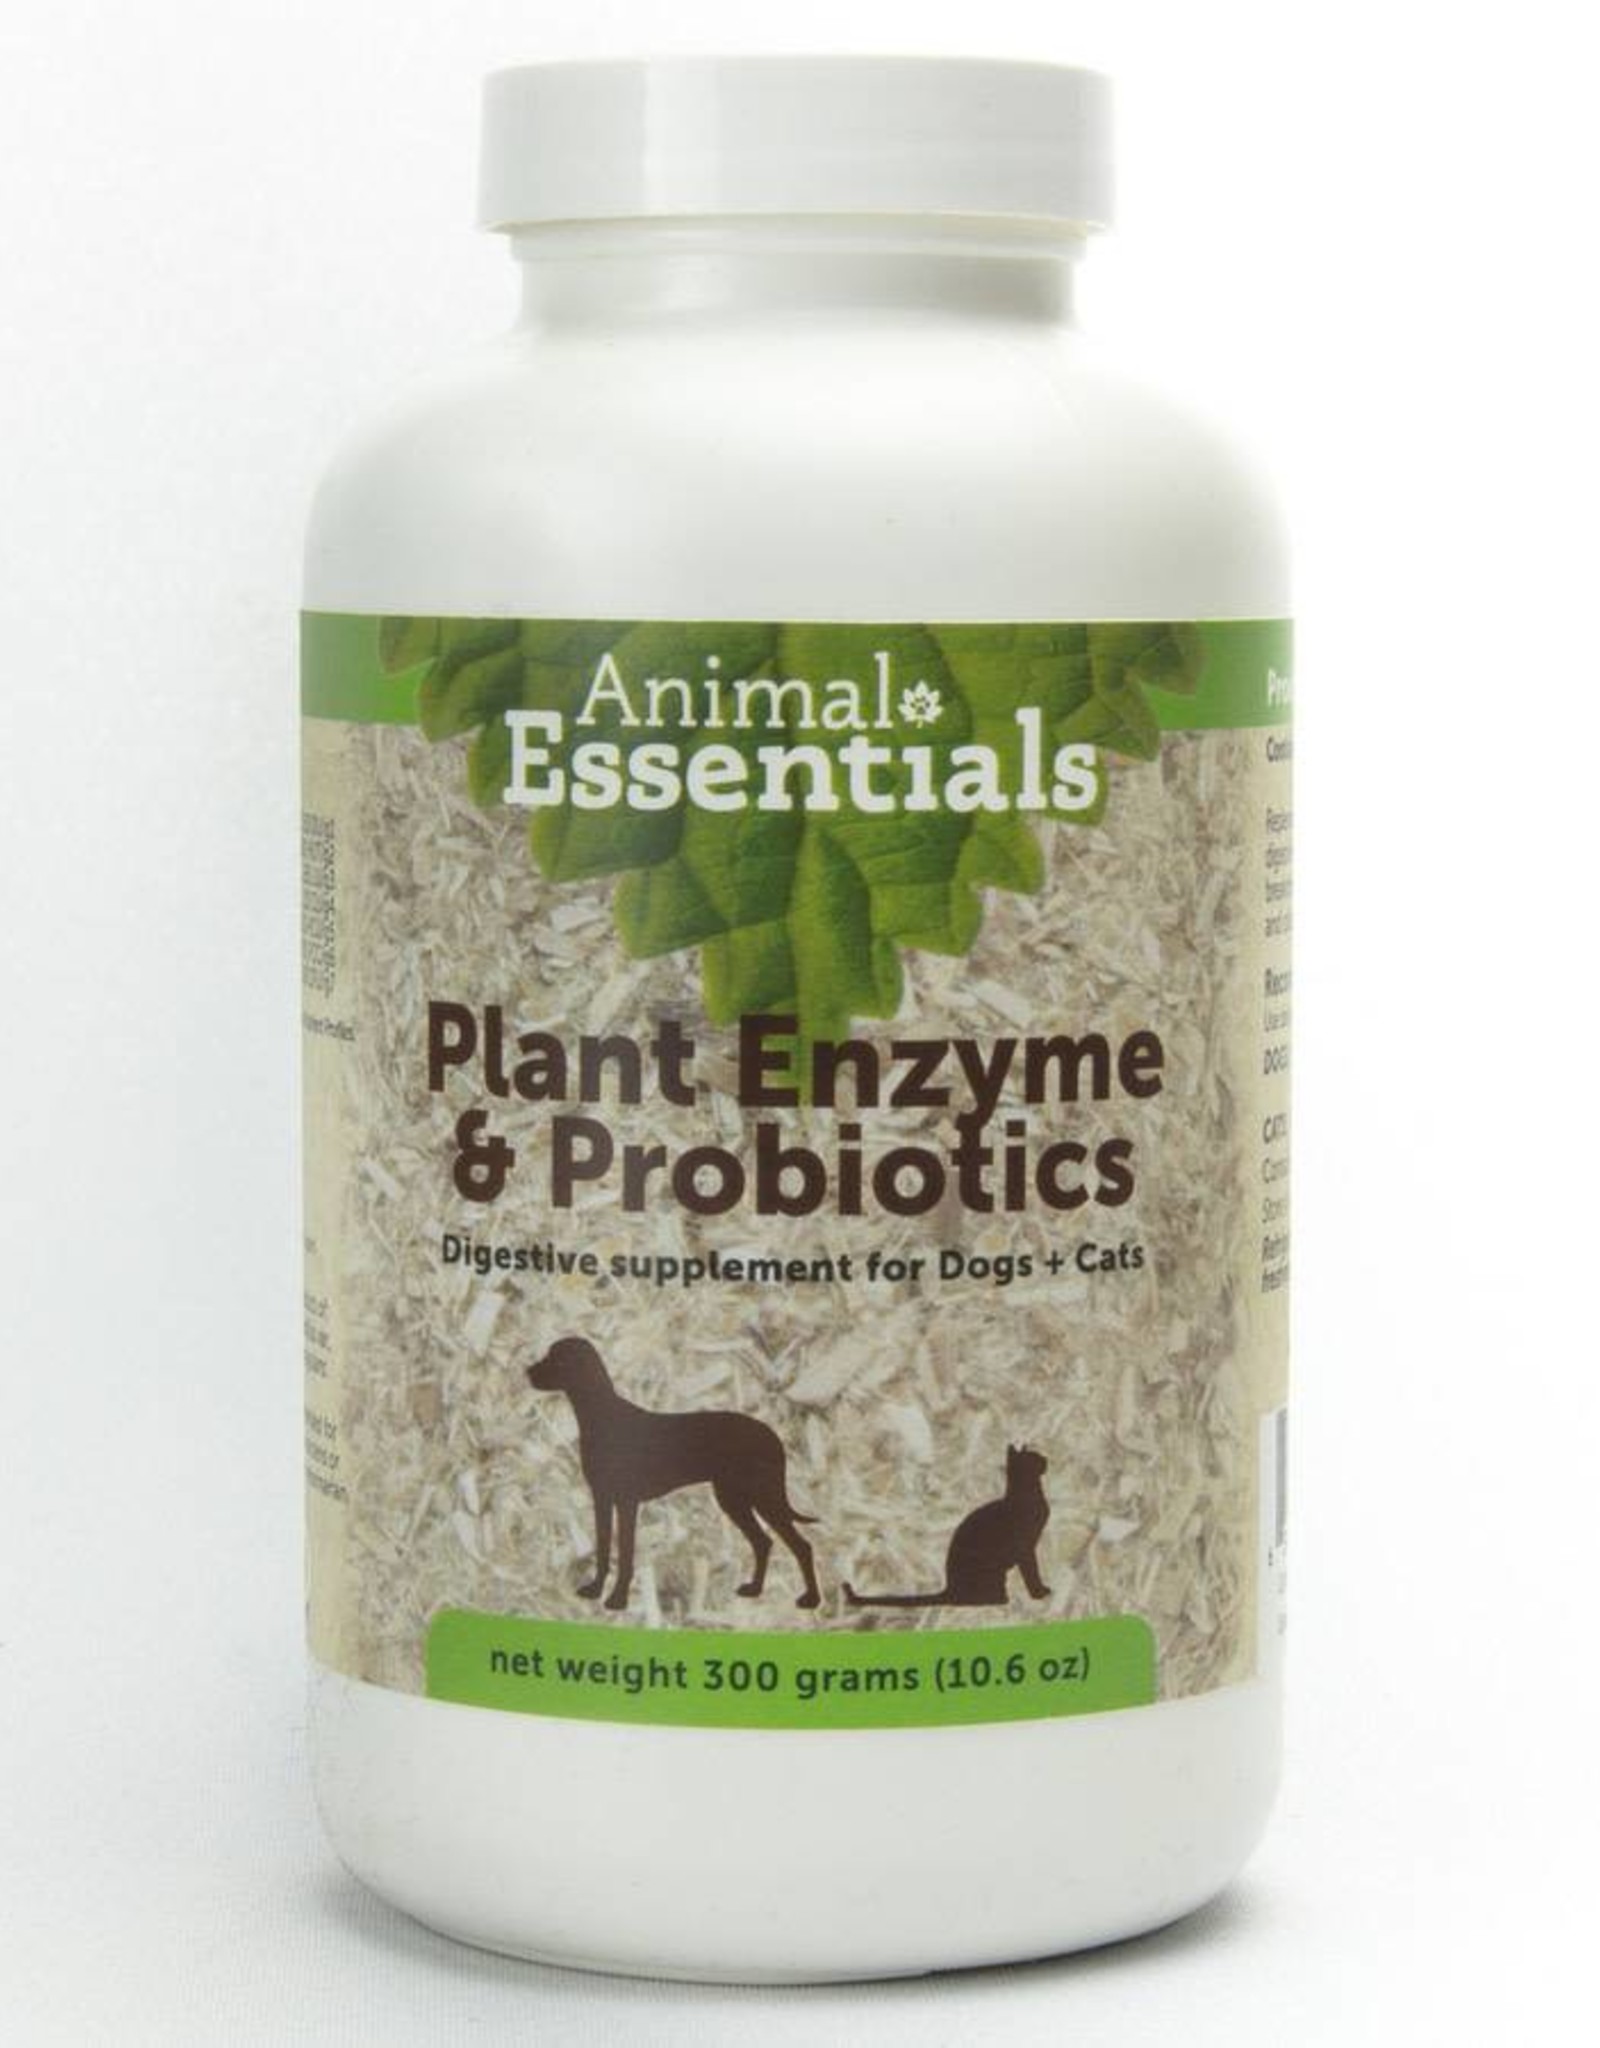 Animal Essentials Animal Essentials Plant Enzyme & Probiotics 300g